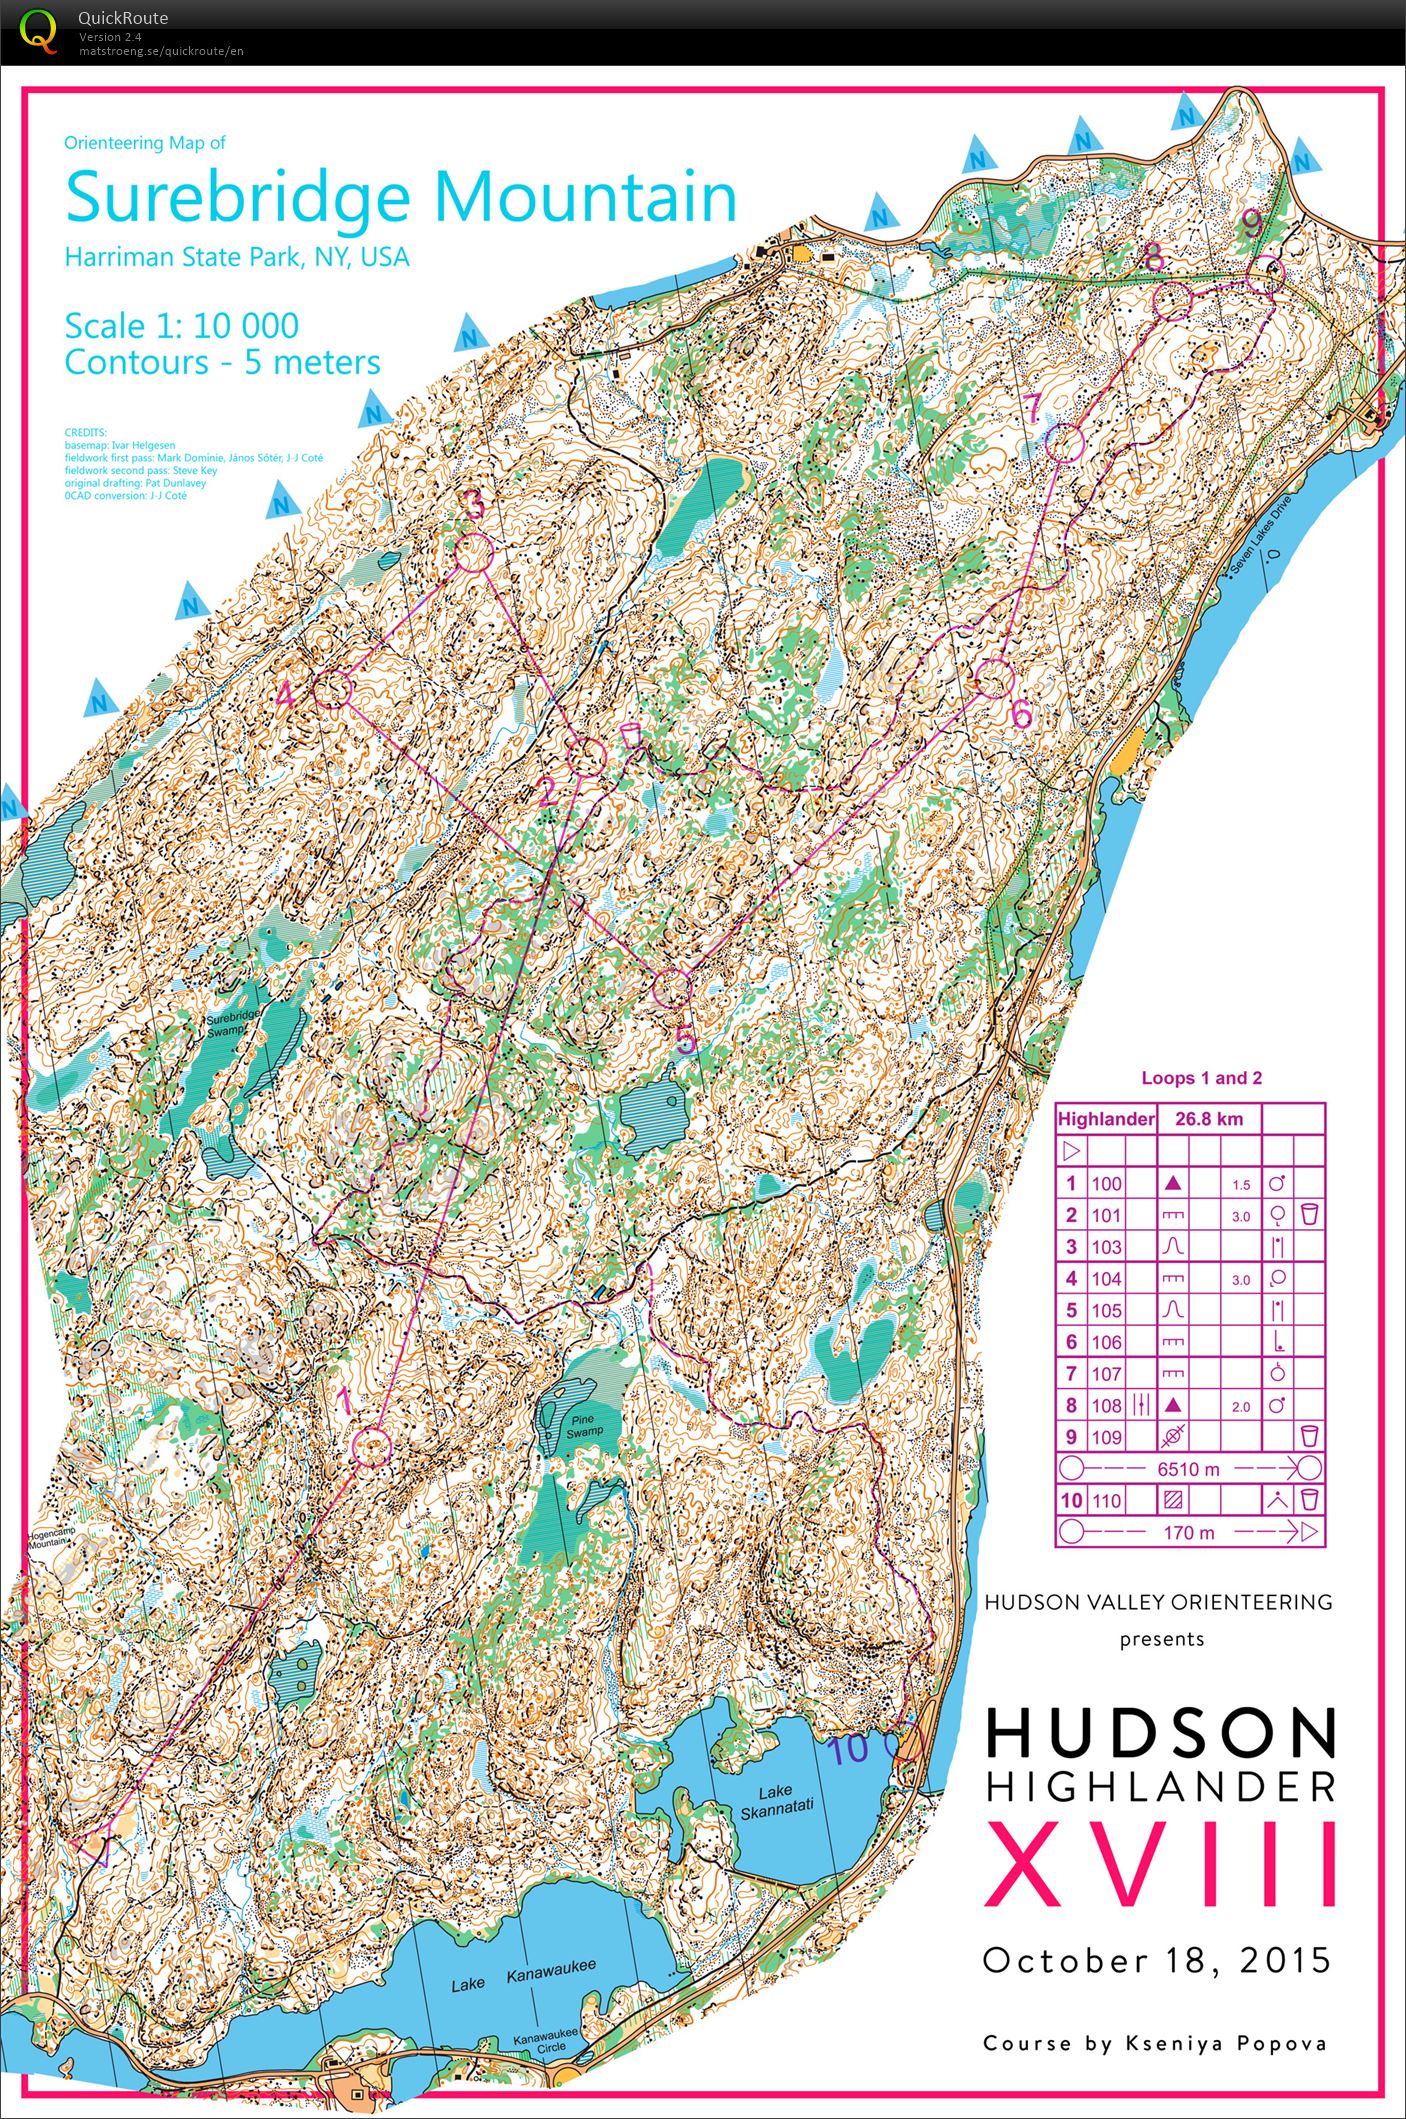 Hudson Highlander Loop 1 and Trail run (2015-10-18)